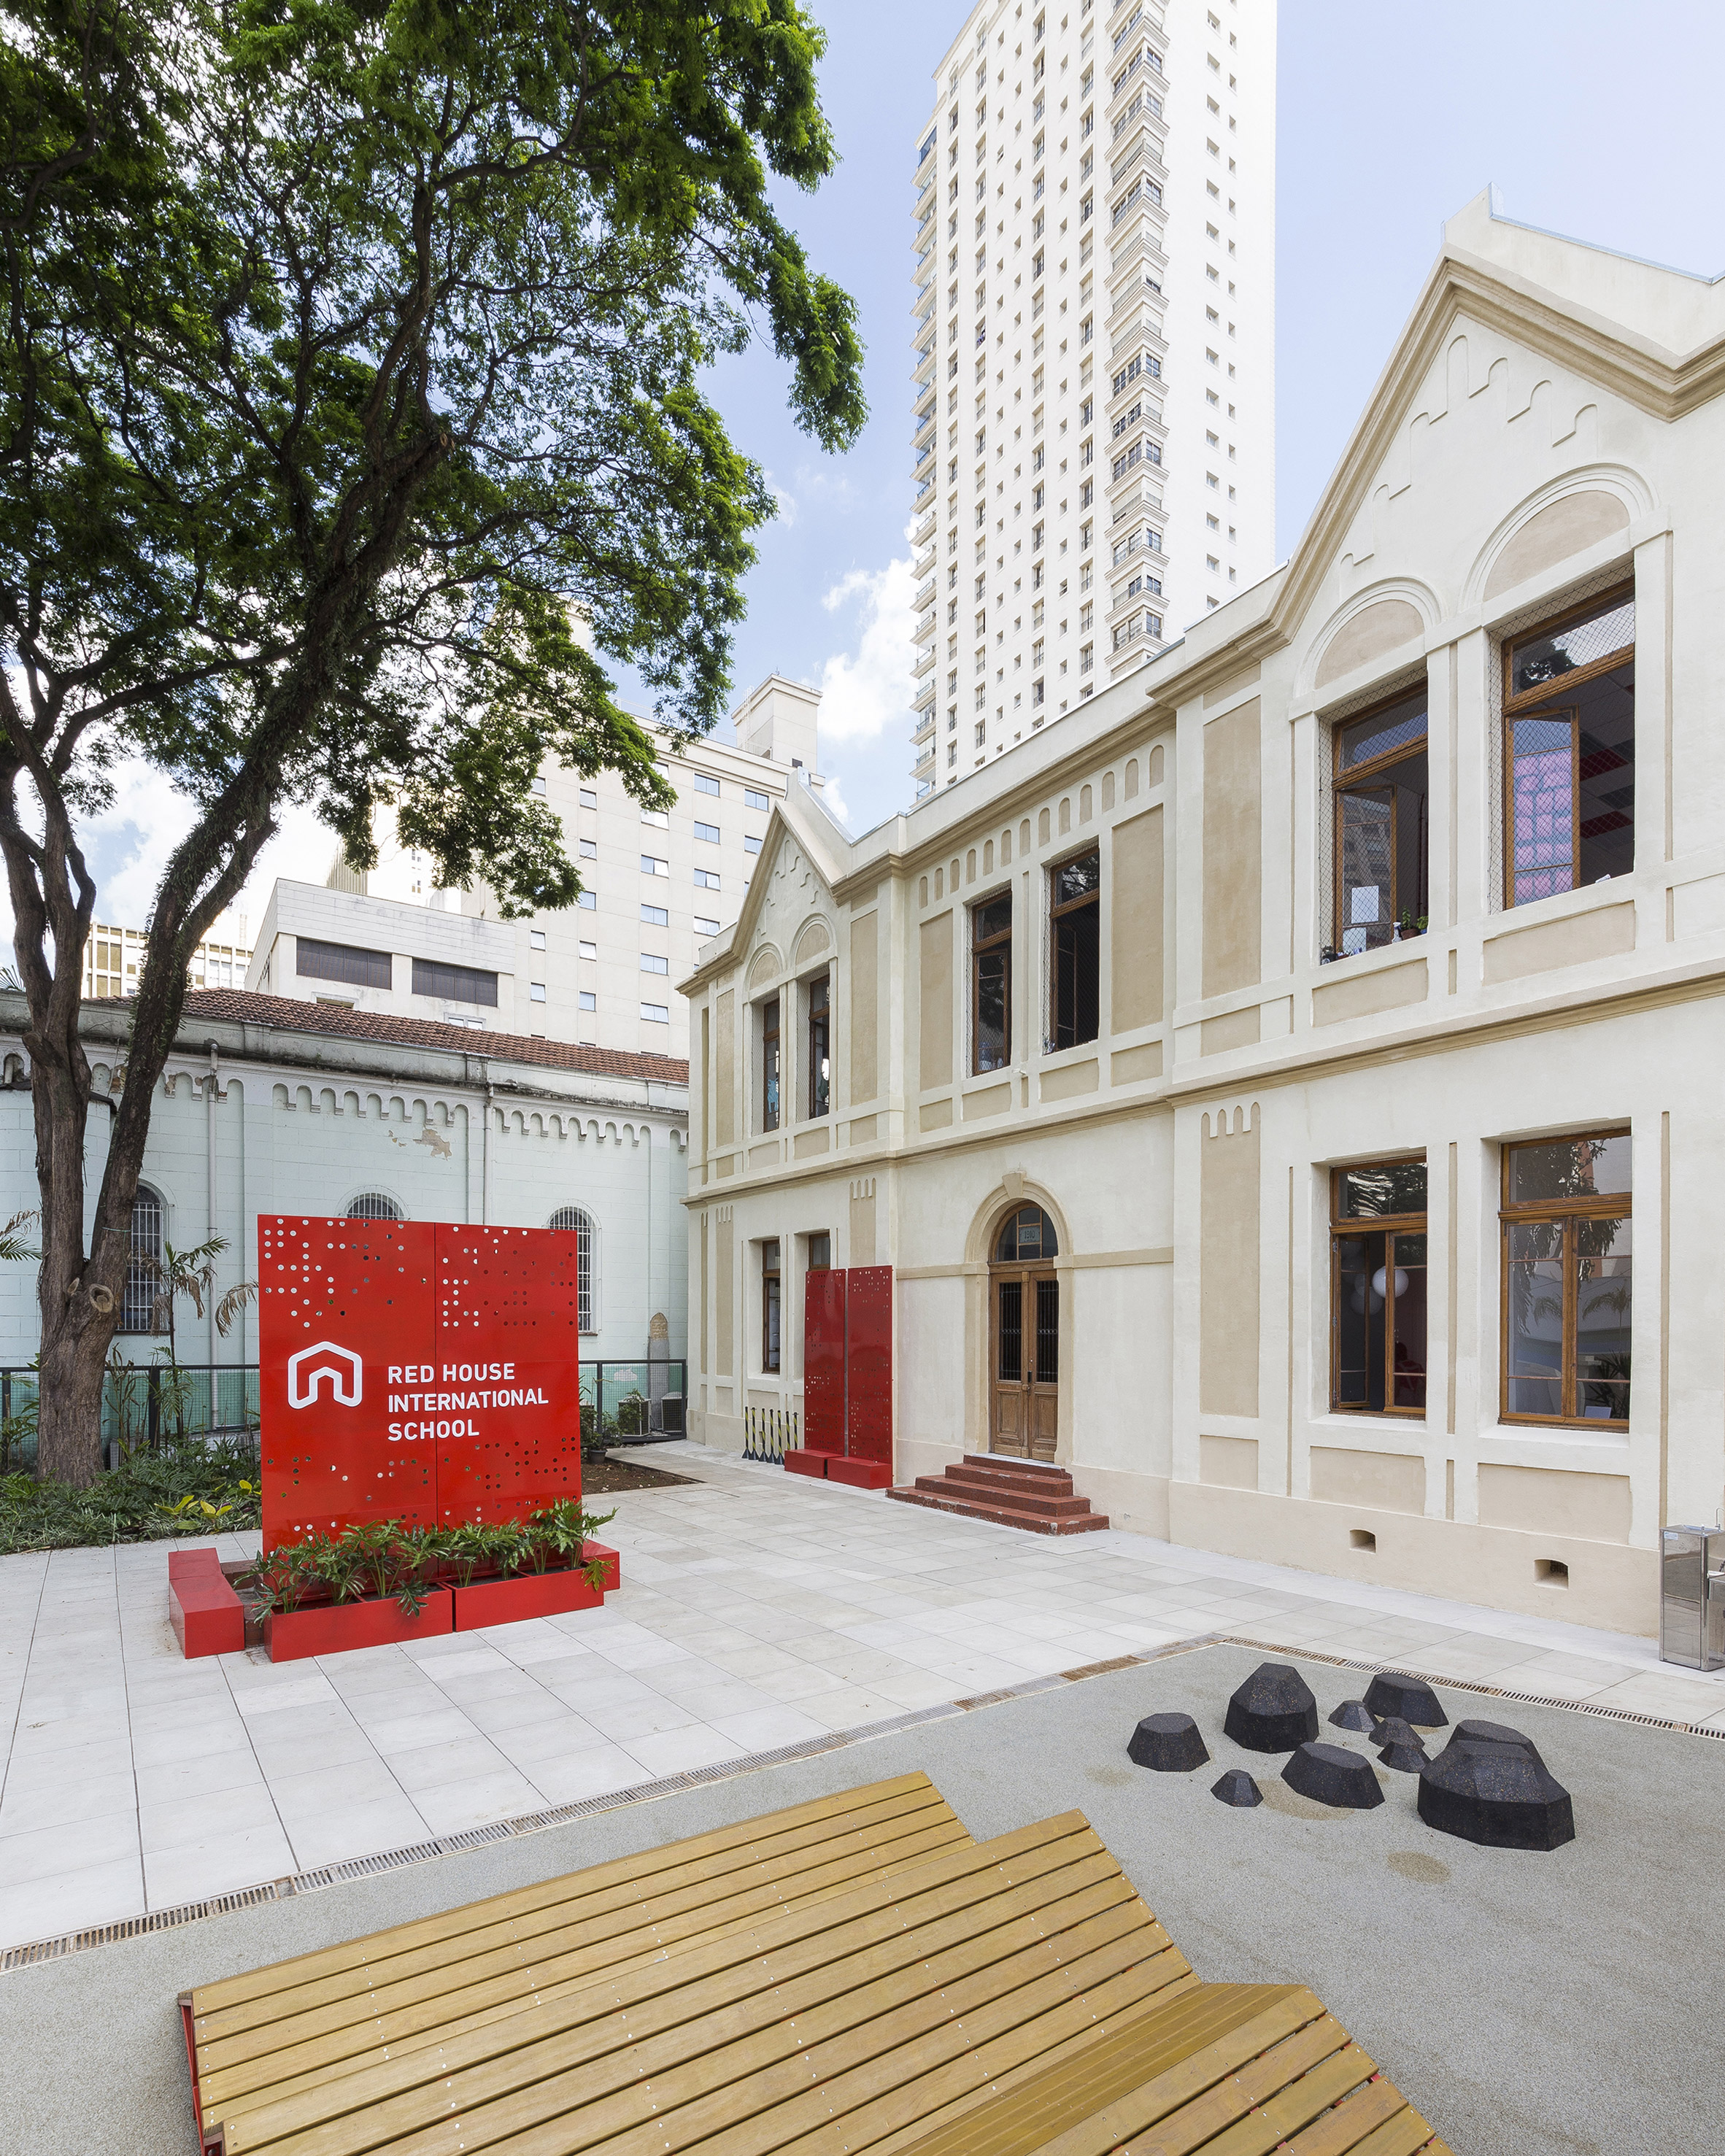 Red House International School by Studio dLux